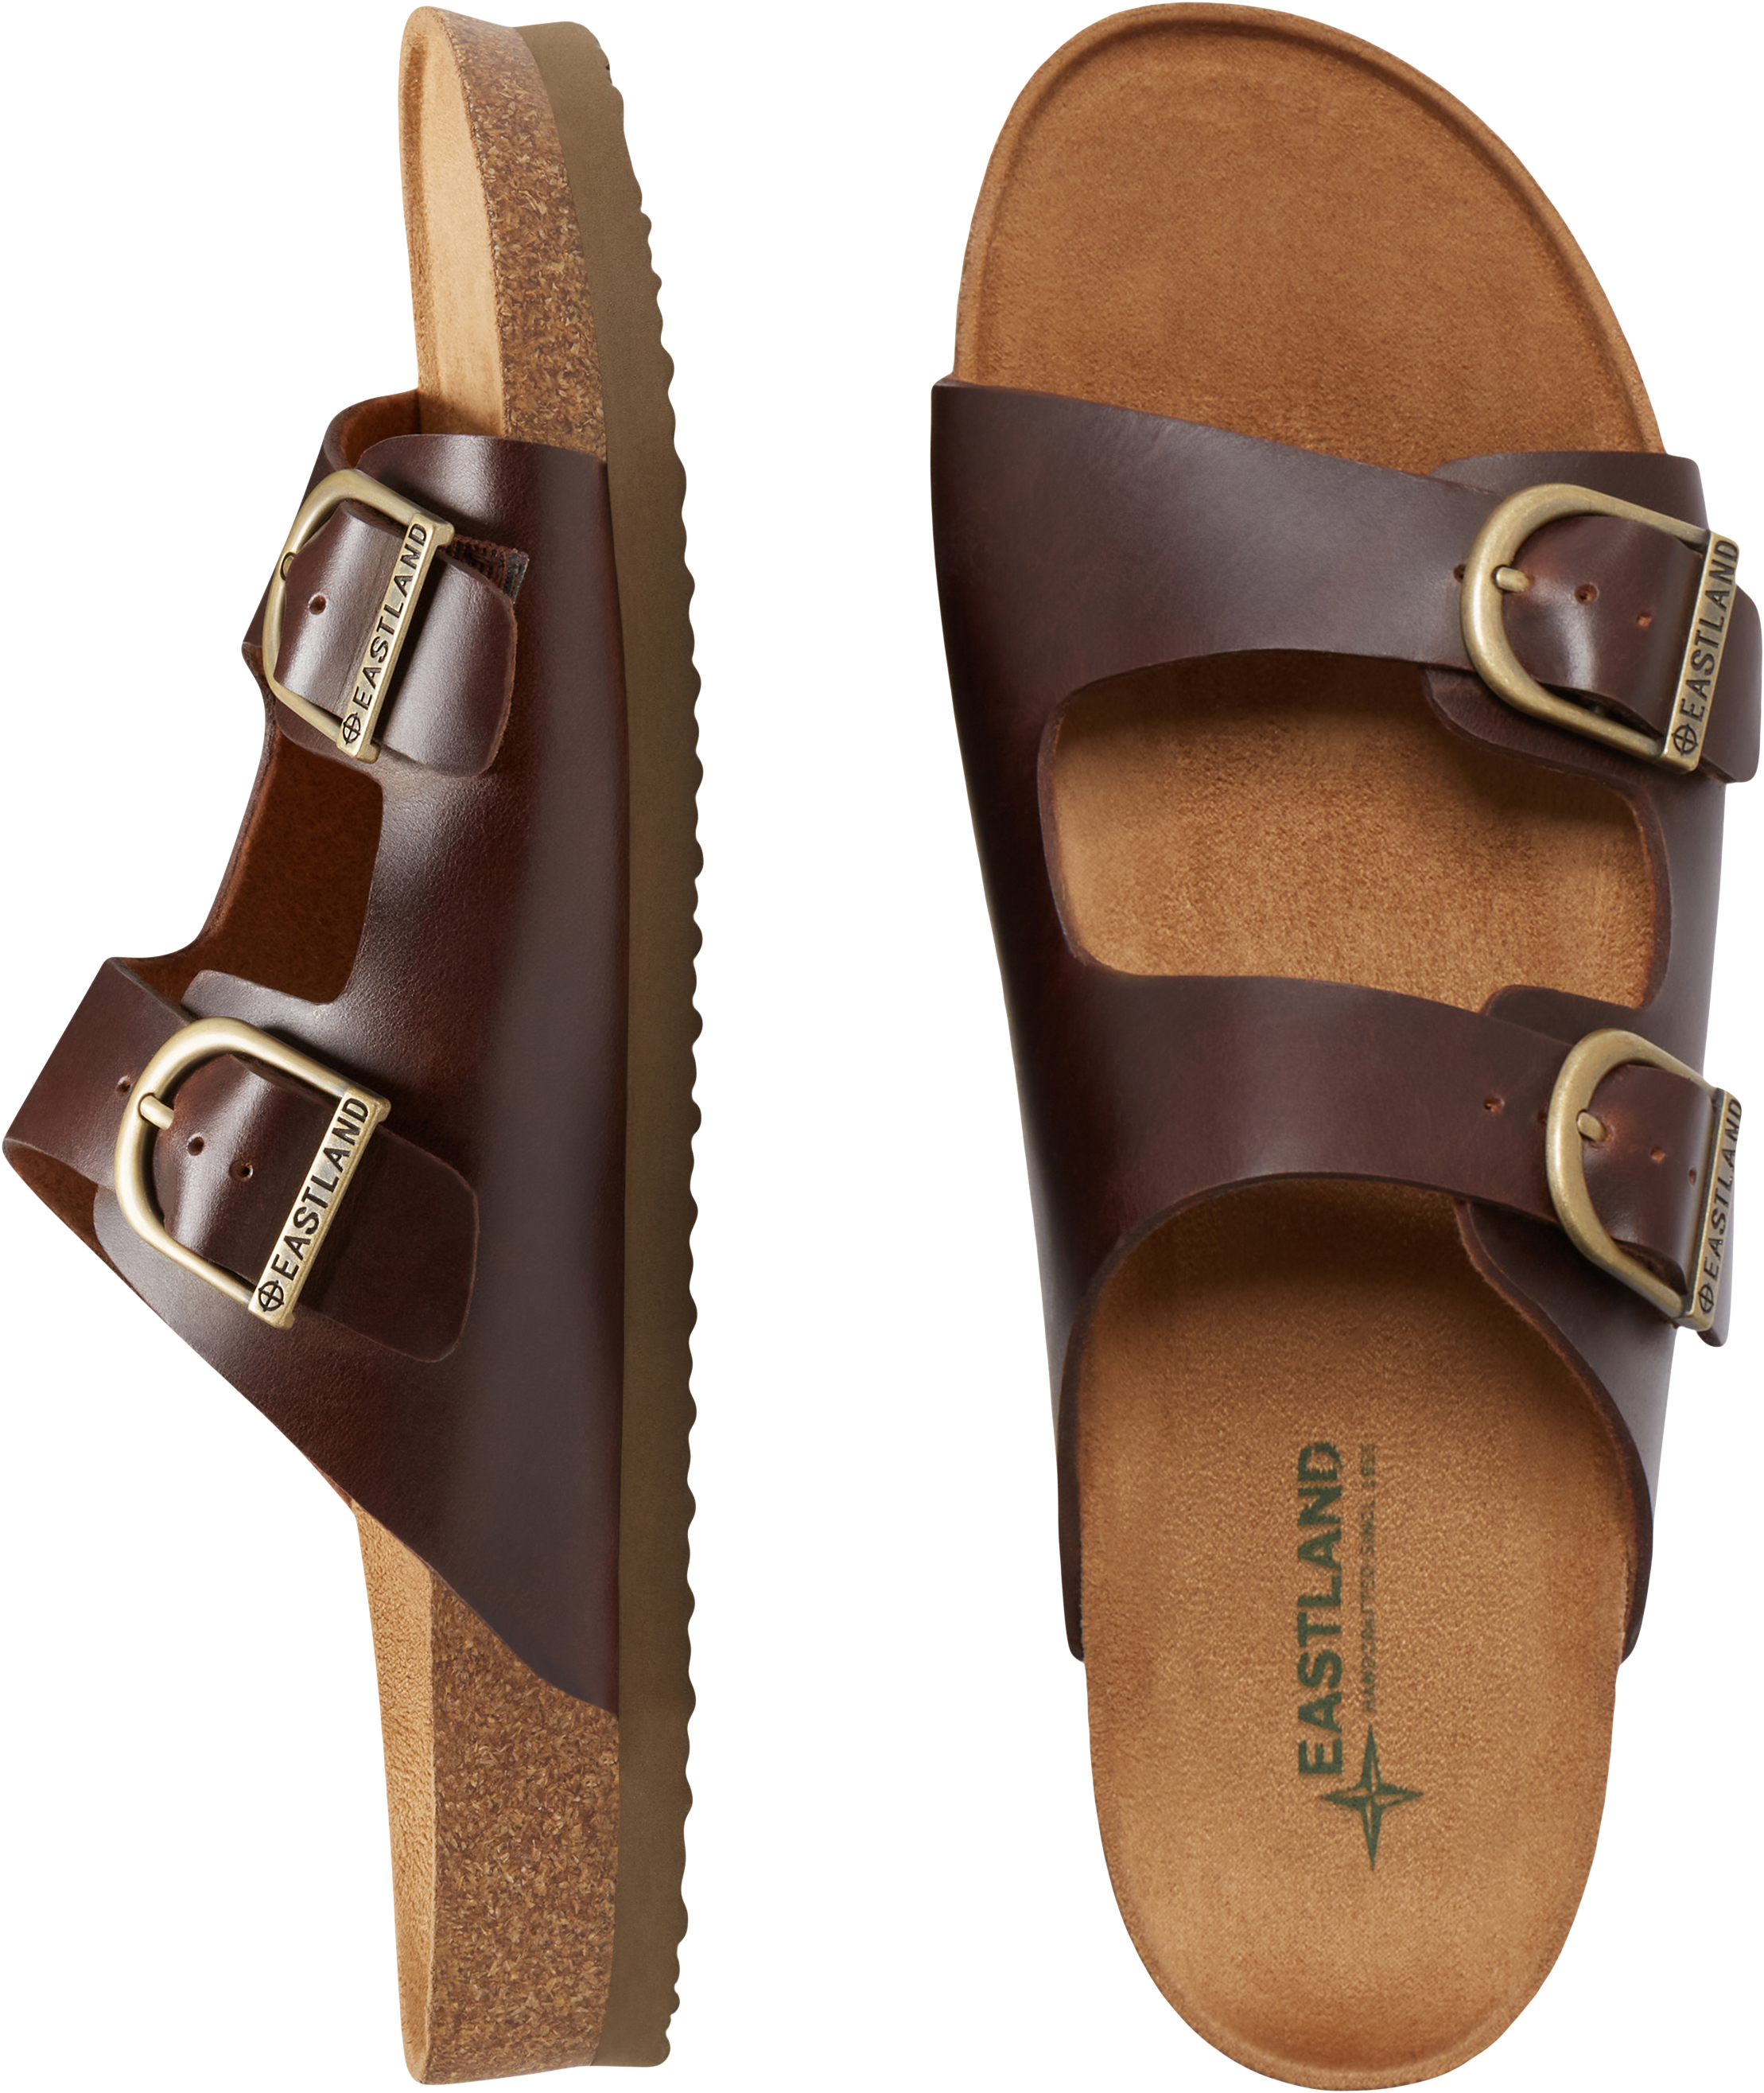 Mens Size 8 Brown American Eagle Flip Flops Sandals Faux Leather